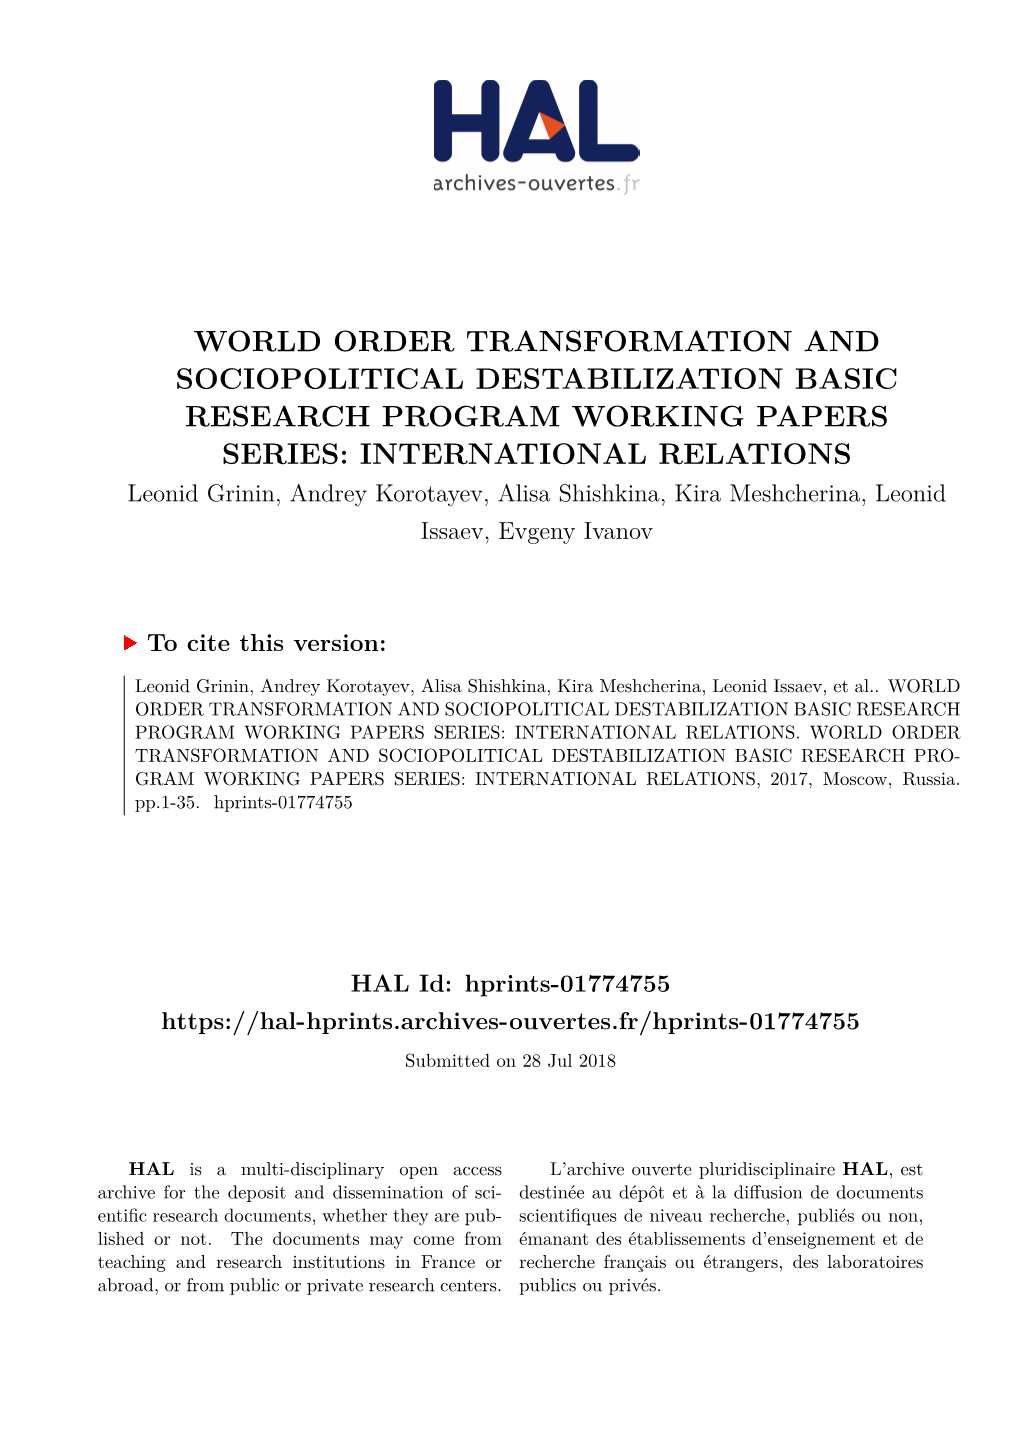 World Order Transformation and Sociopolitical Destabilization Basic